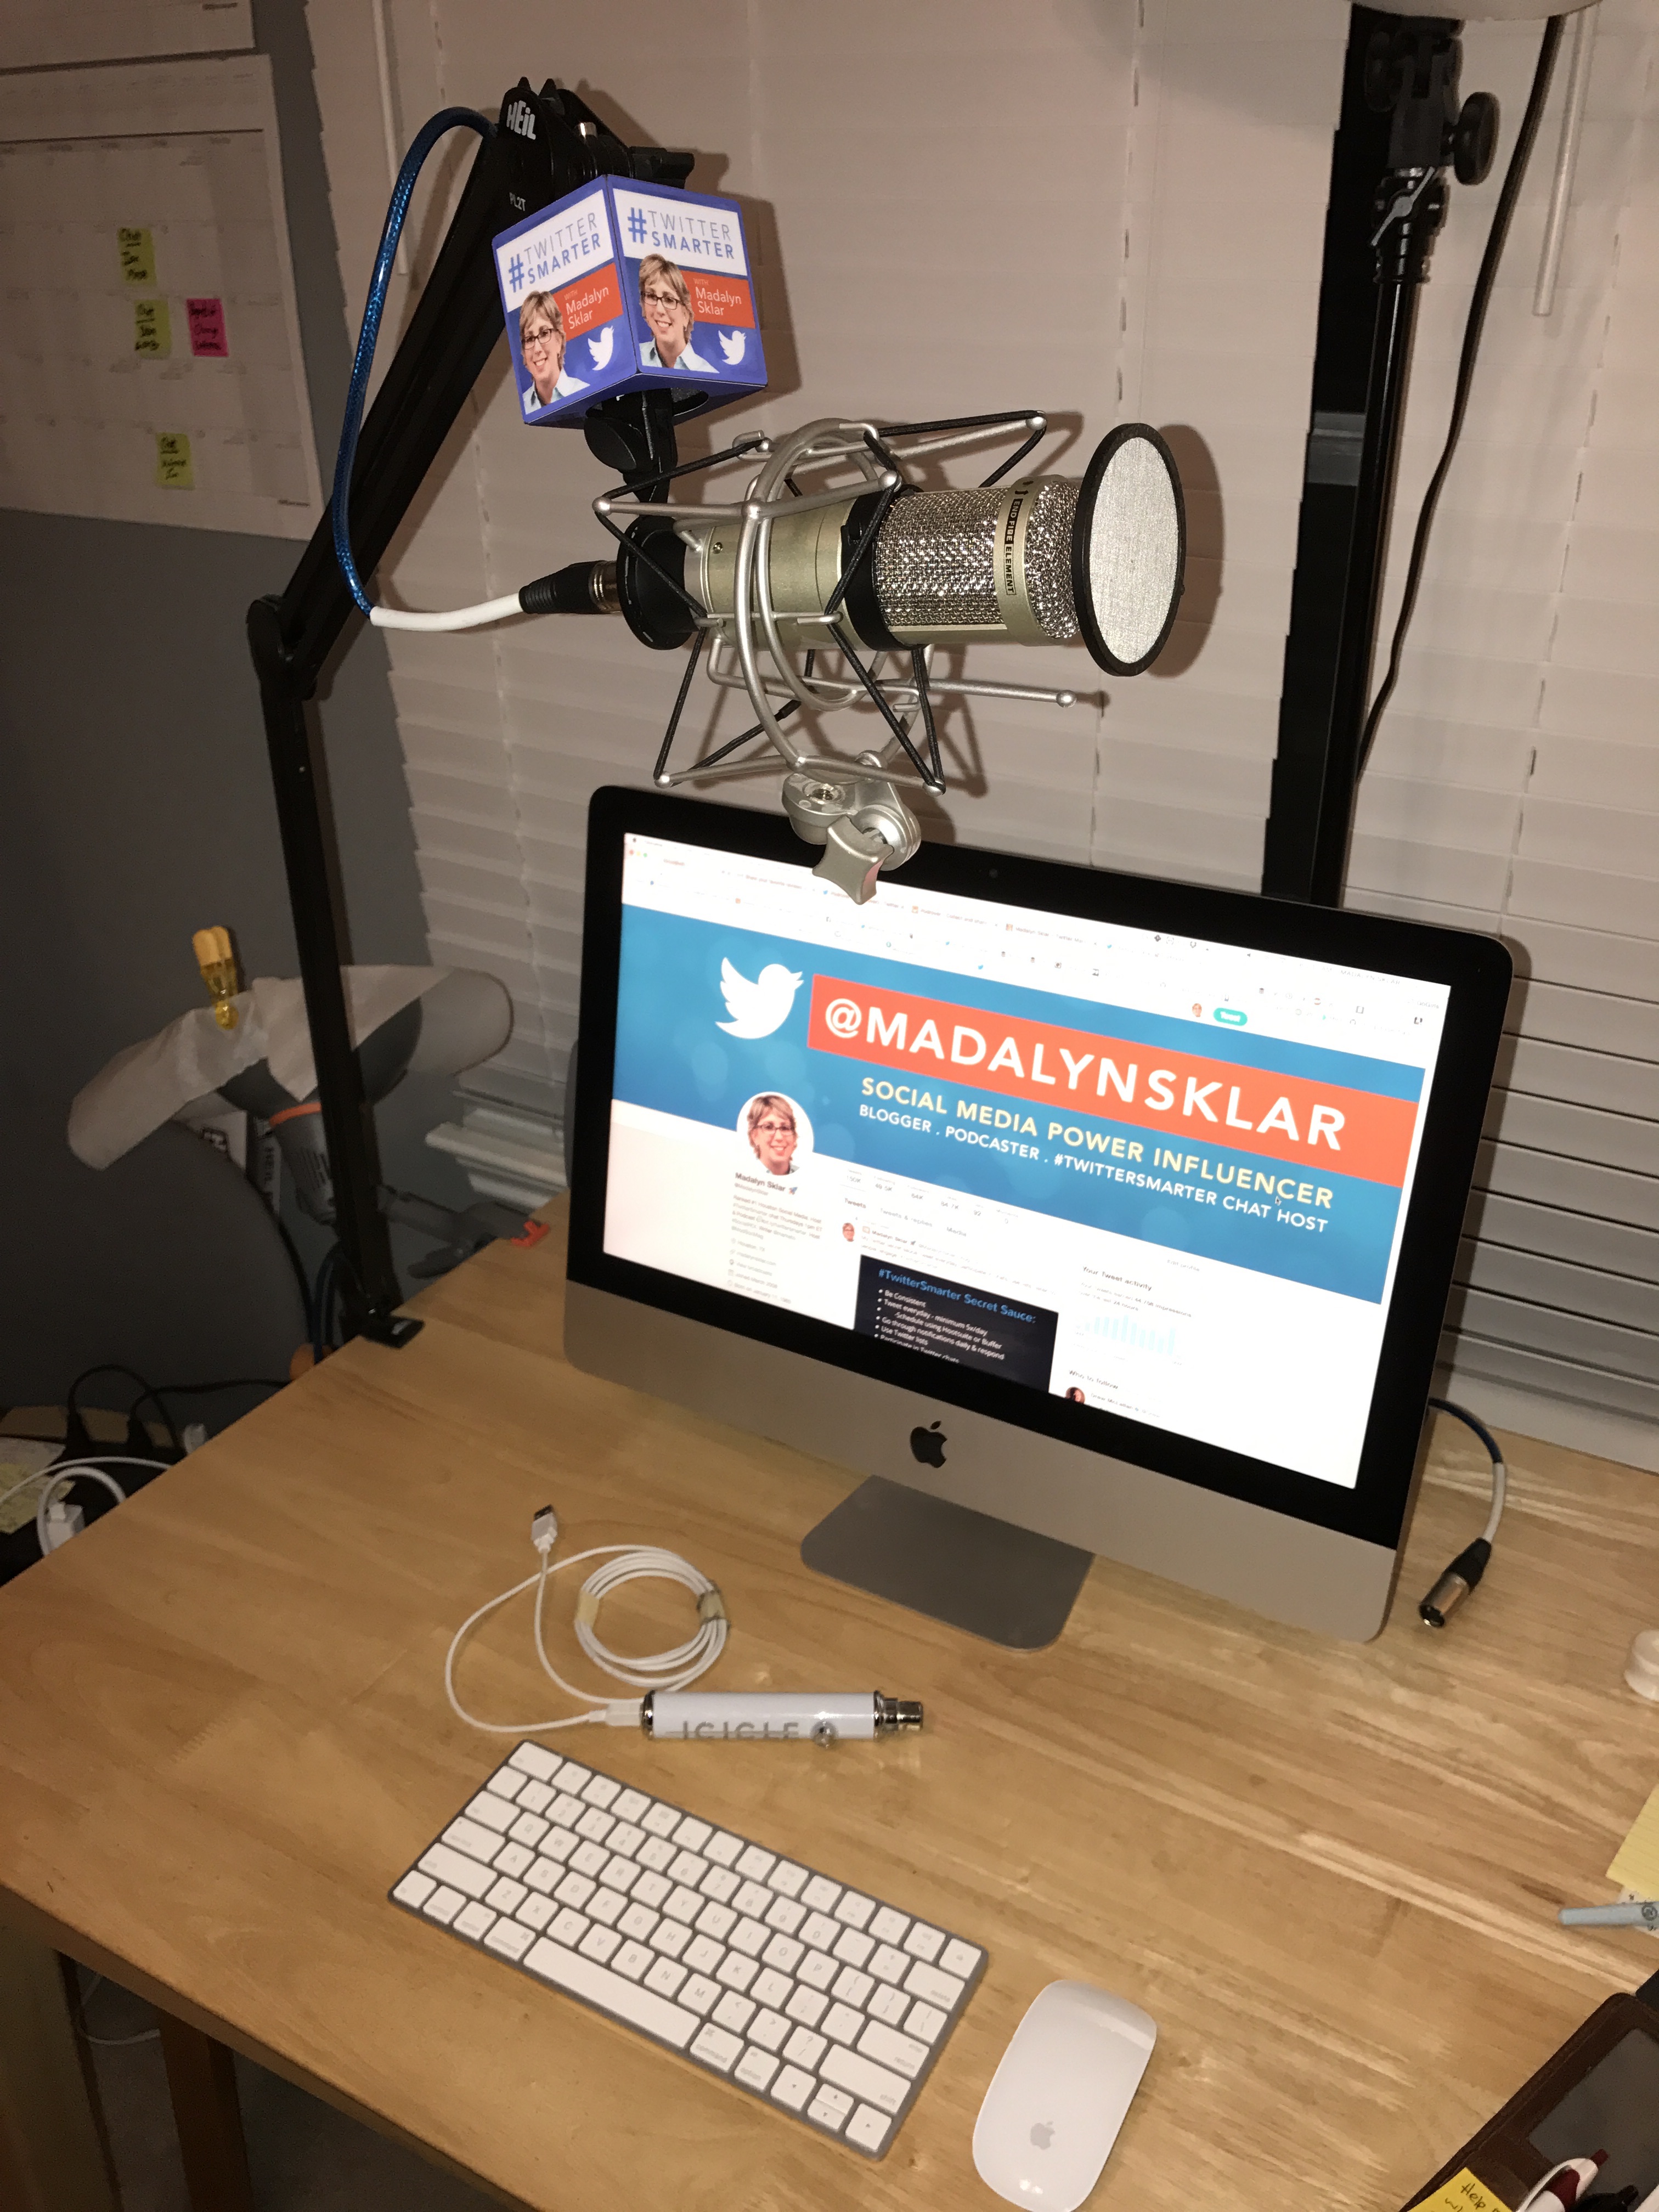 The podcasting gear of Madalyn Sklar